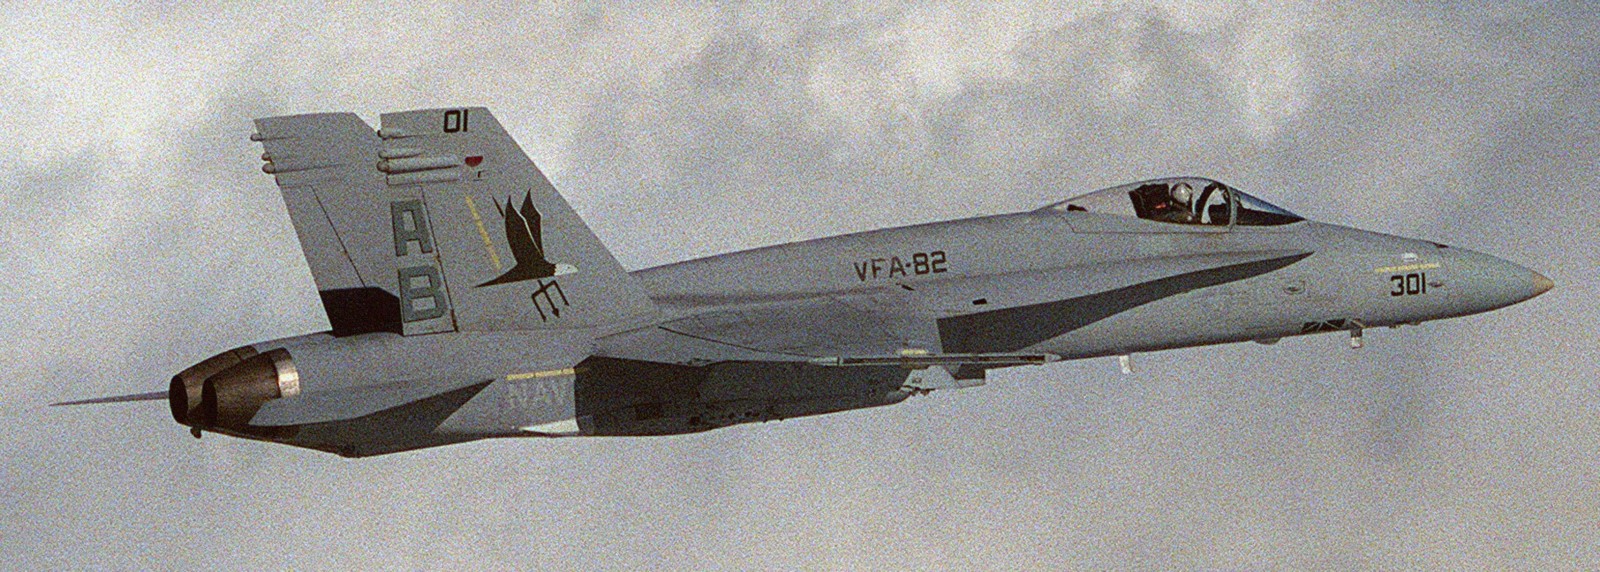 vfa-82 marauders strike fighter squadron f/a-18c hornet 77